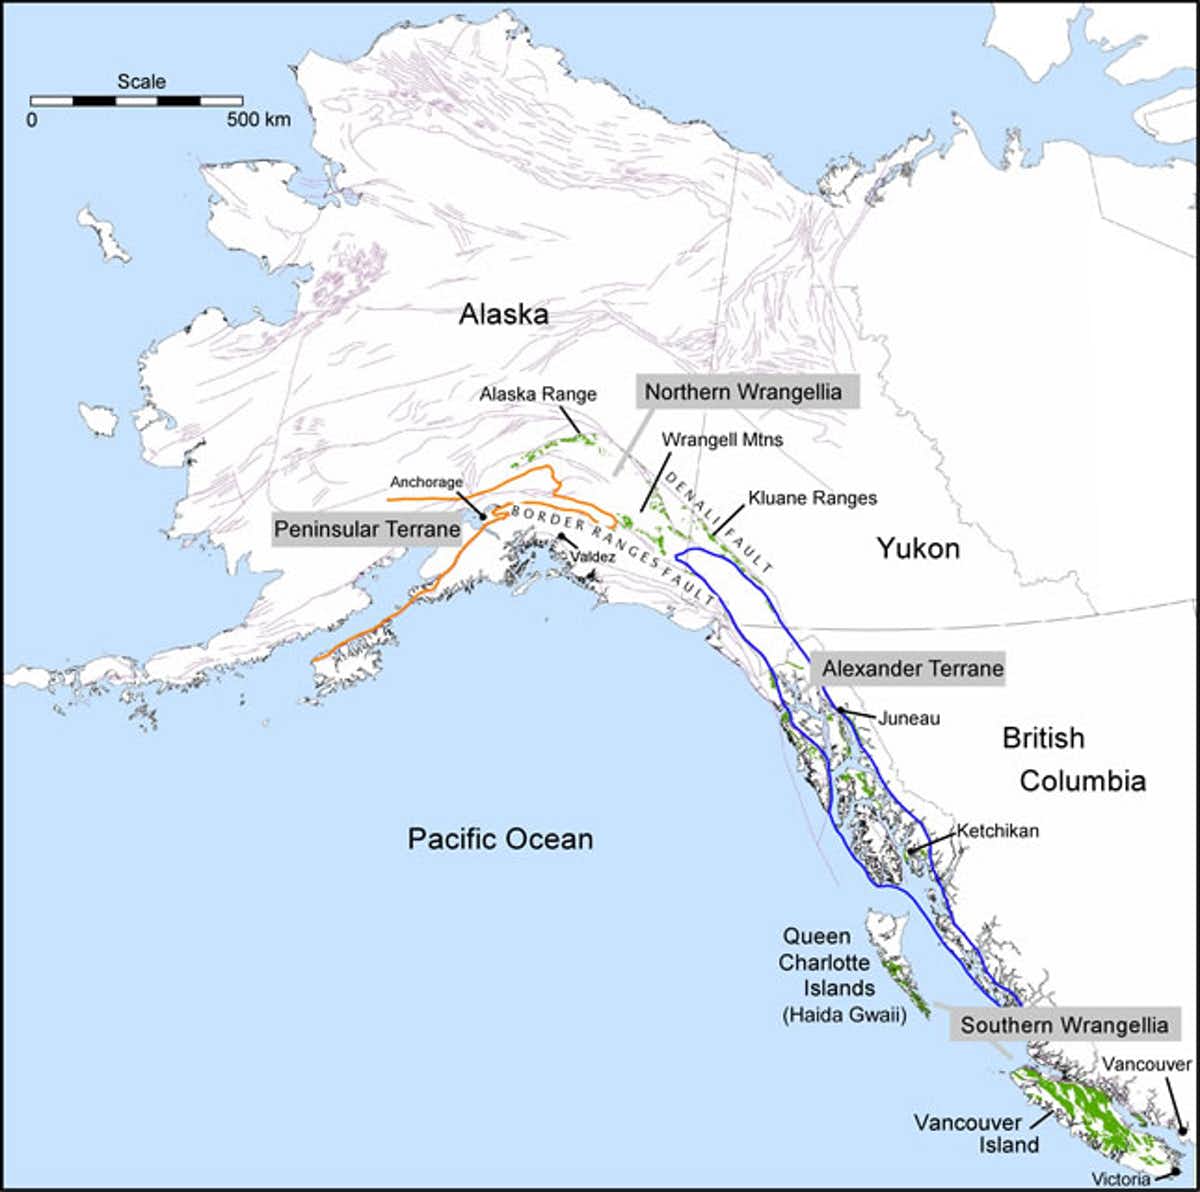 The distribution of Wrangellia flood basalts in Alaska, Yukon and British Columbia. (University of British Columbia/EOAS)